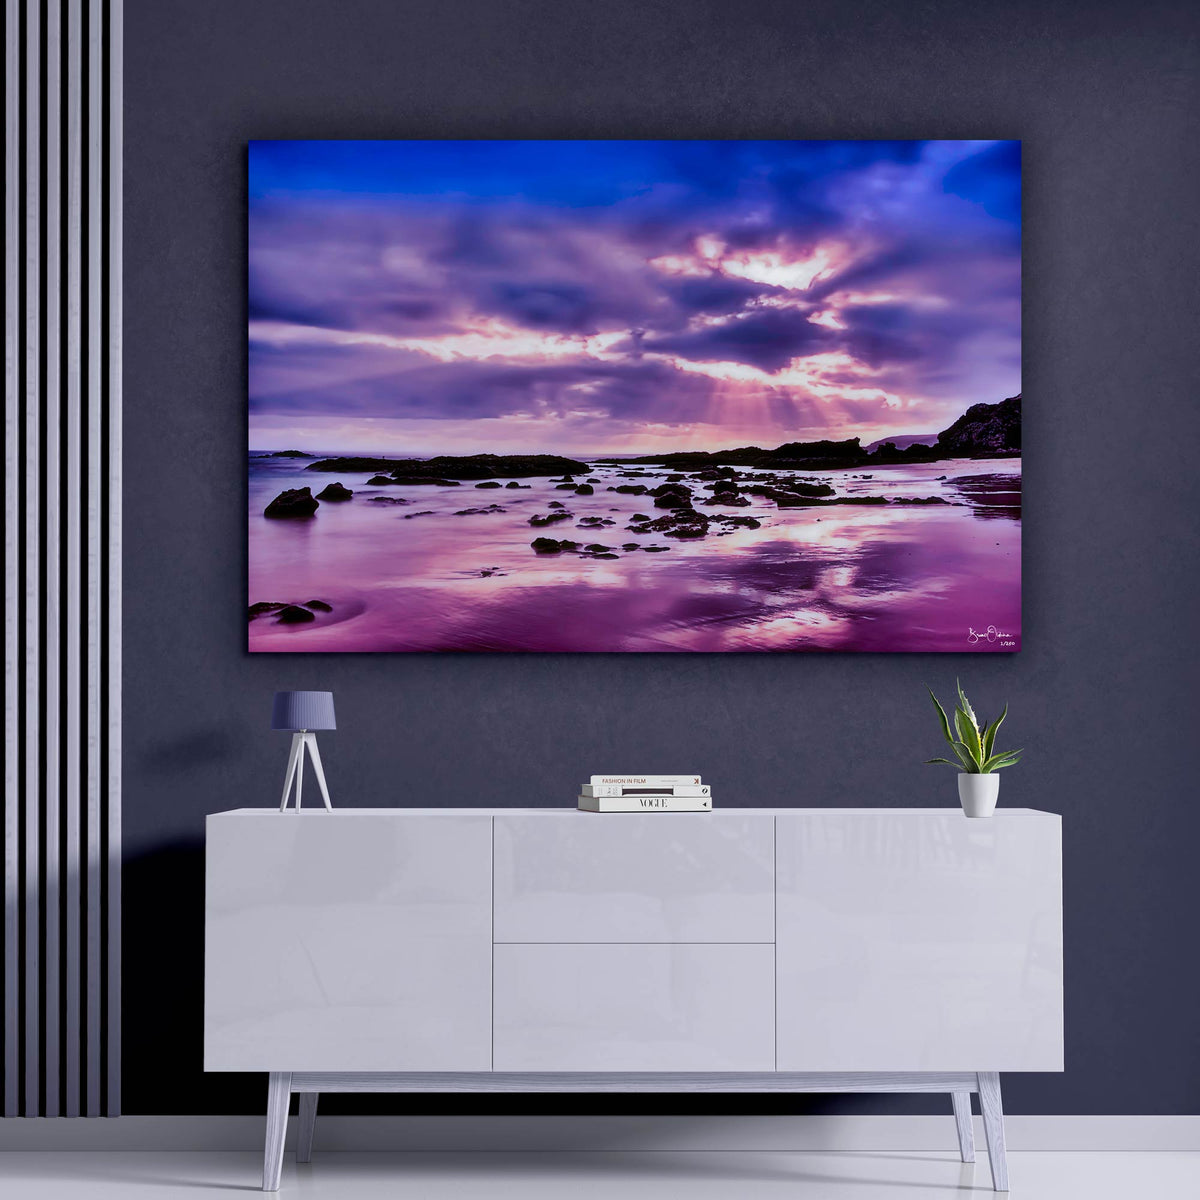 Purple Rays - An Artistic Beach Scene